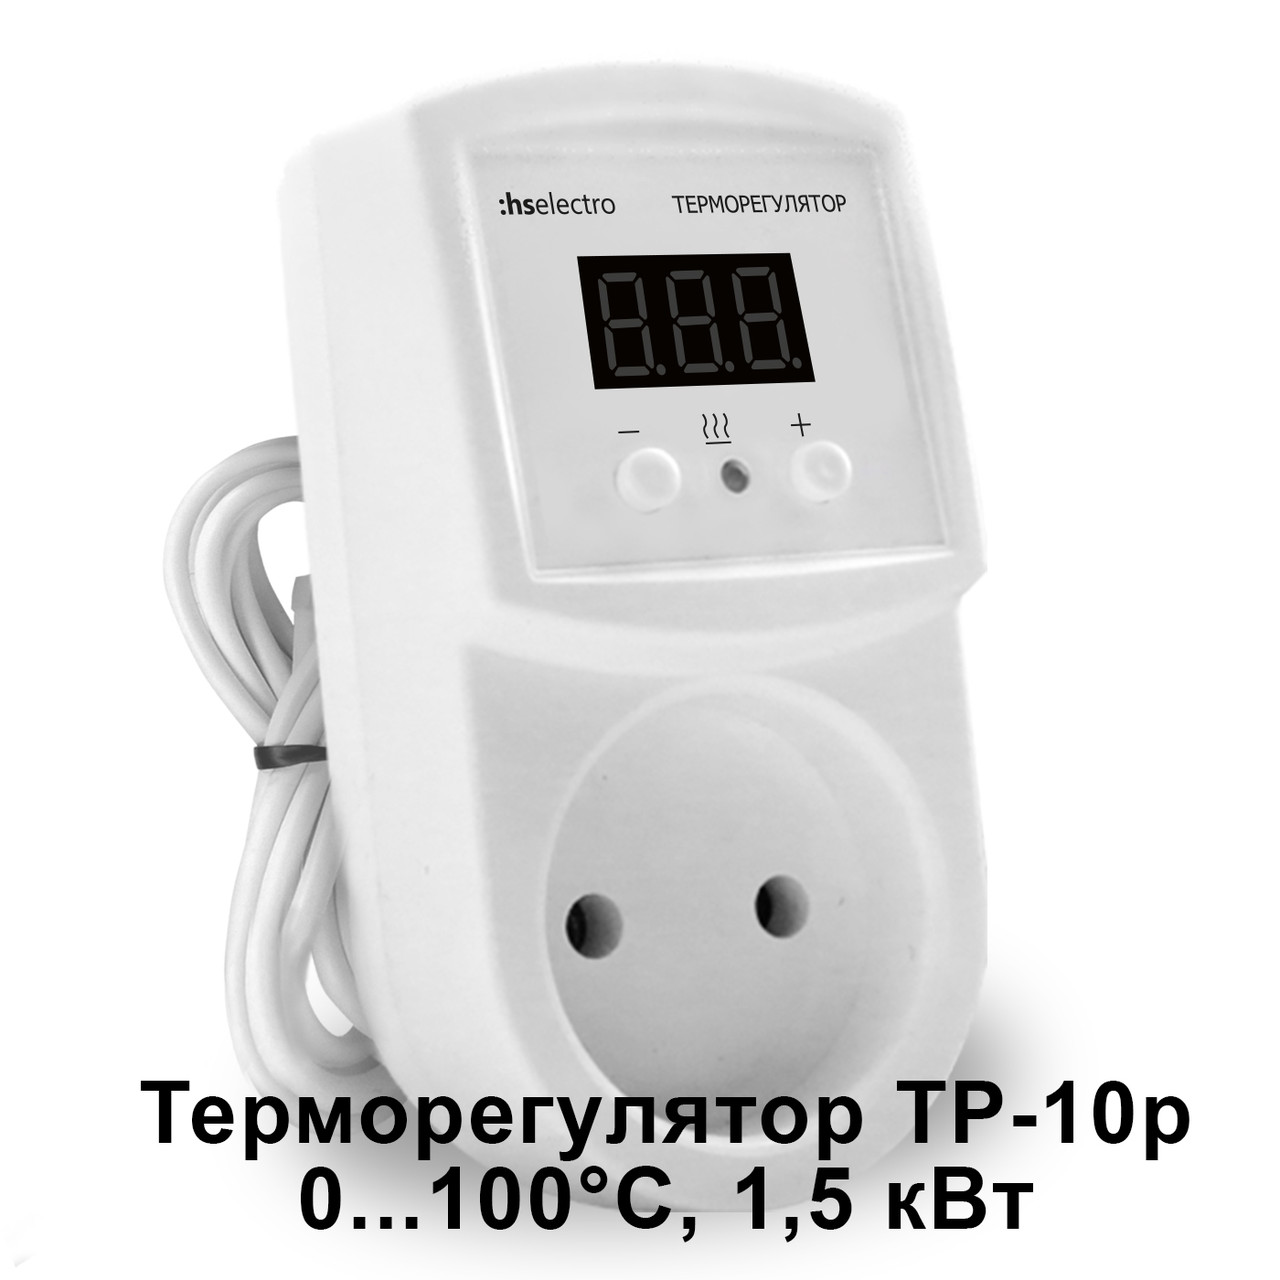 Терморегулятор ТР-10р (0...100°C, 1,5 кВт) ()